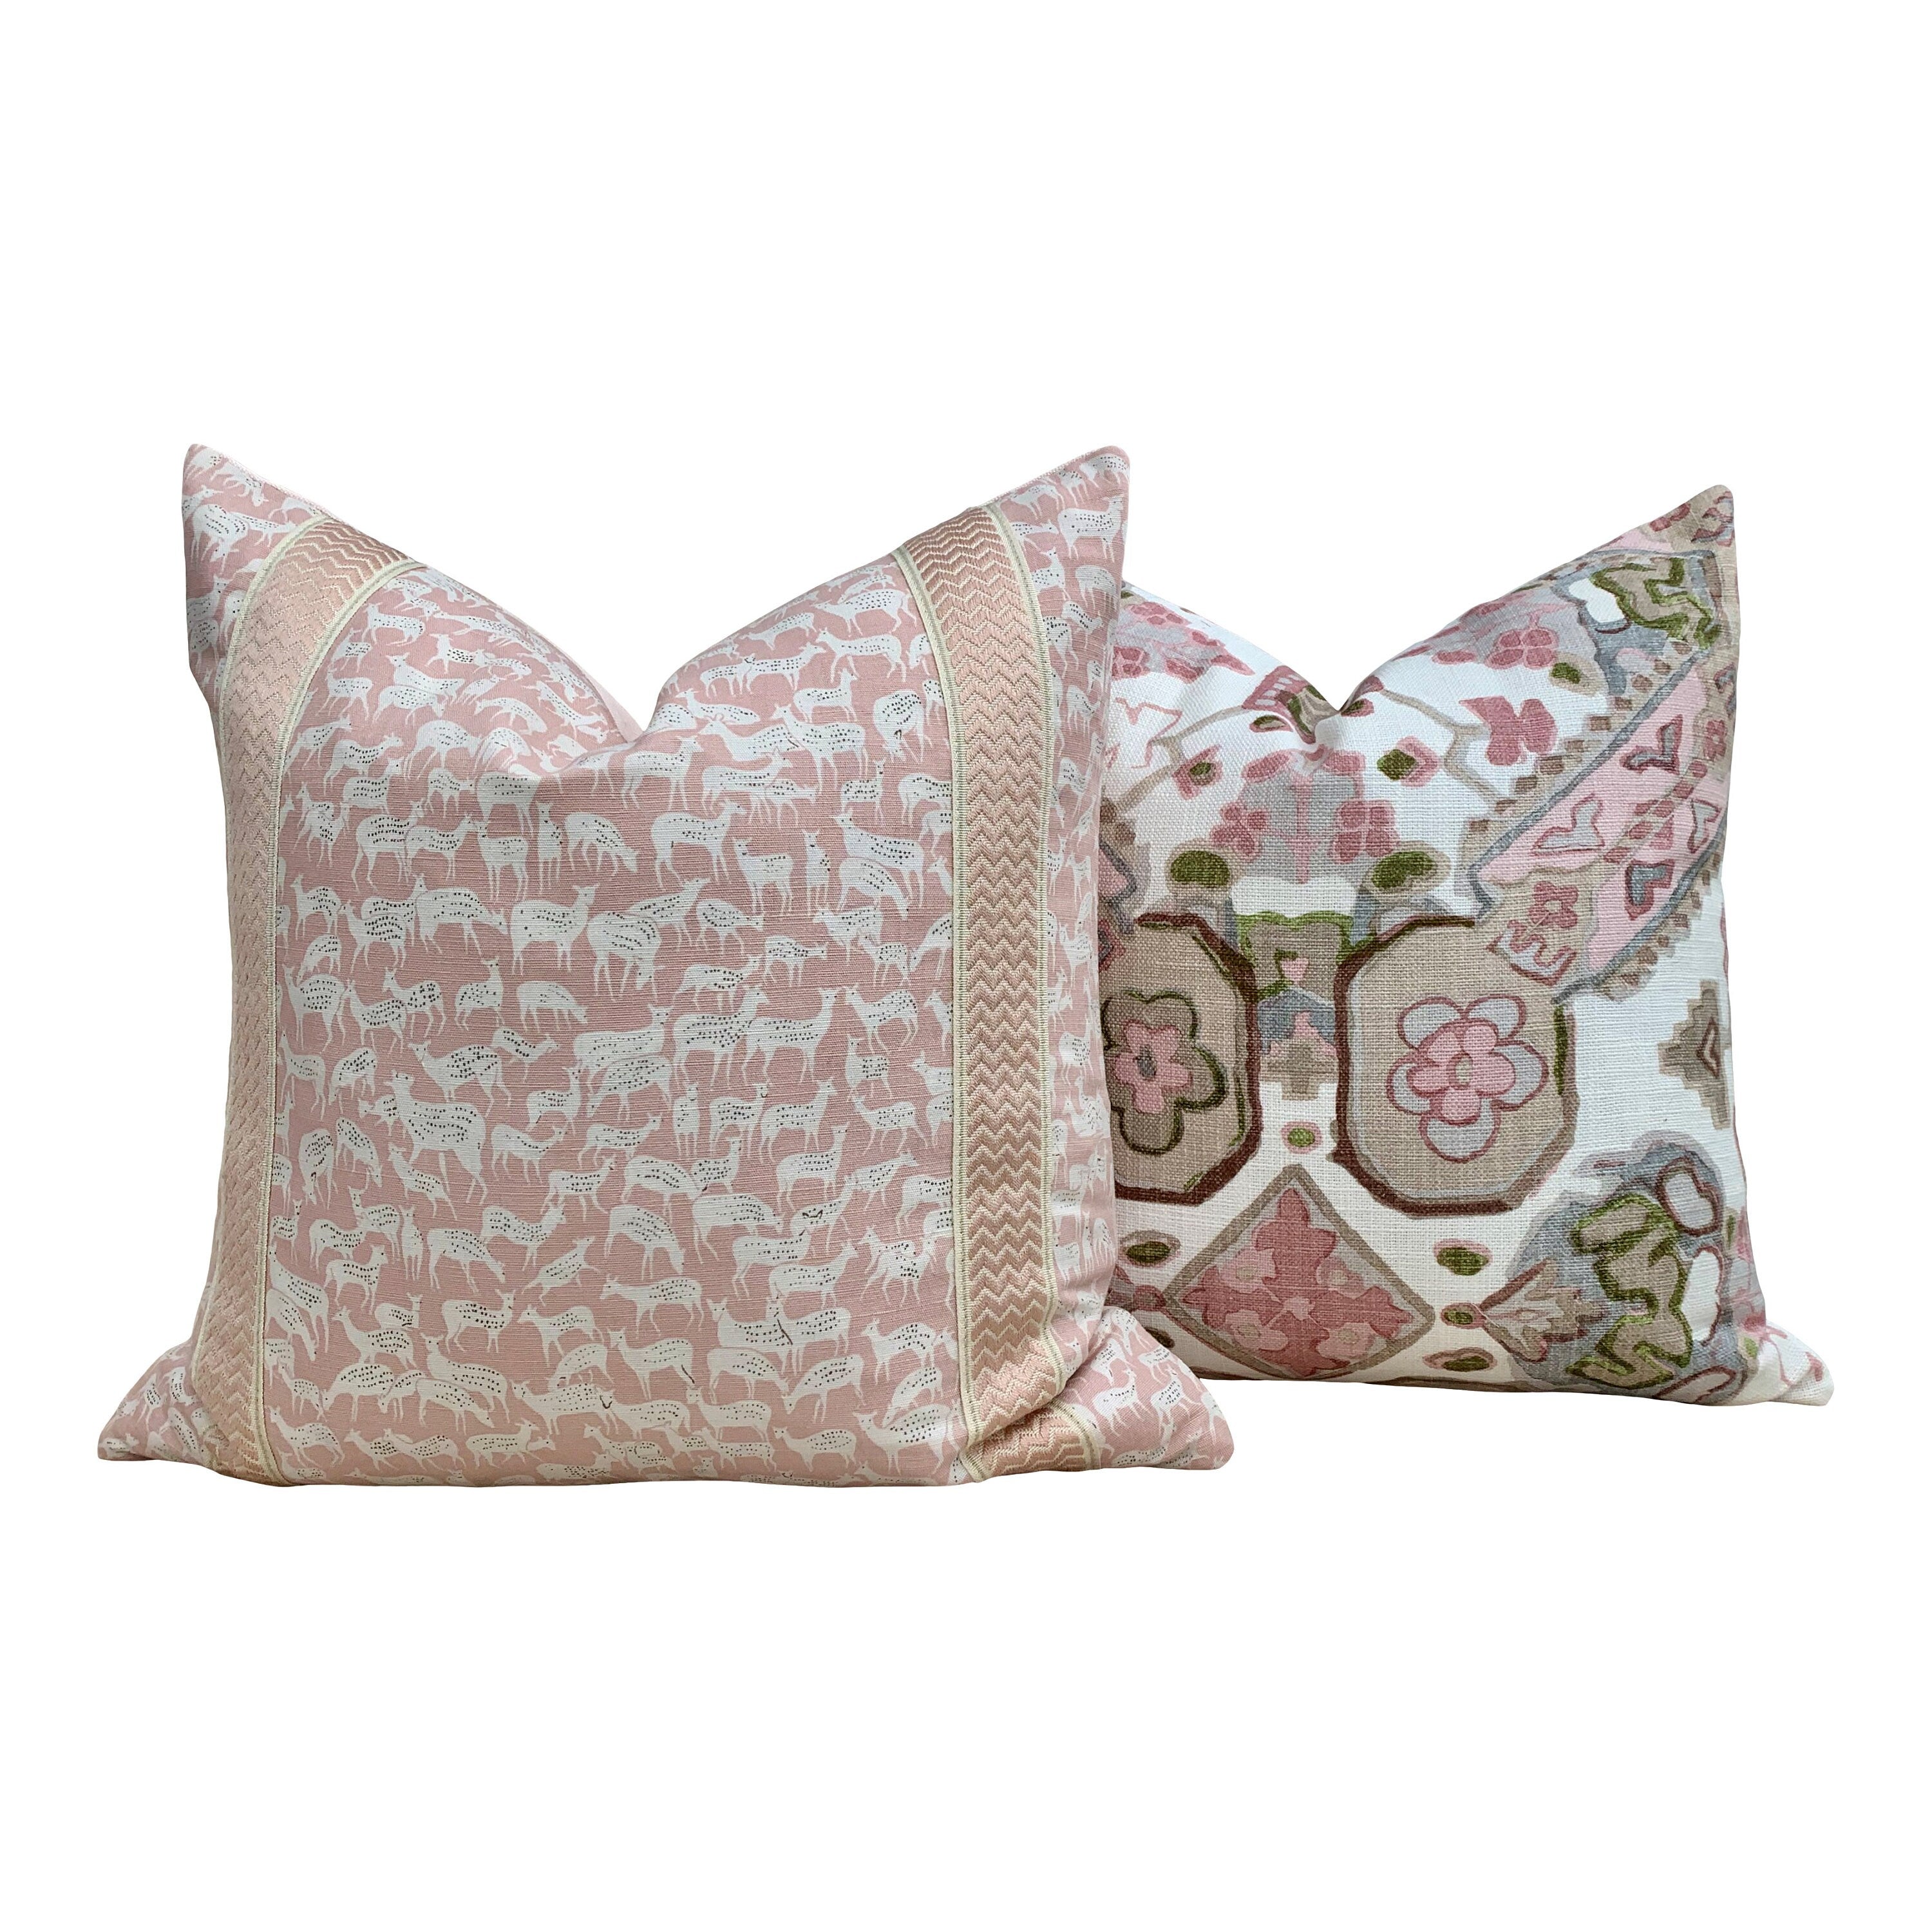 Schumacher Fauna Pillow in Blush. Decorative Pillow, accent throw cushion, designer pillow cover, lumbar accent pillow.